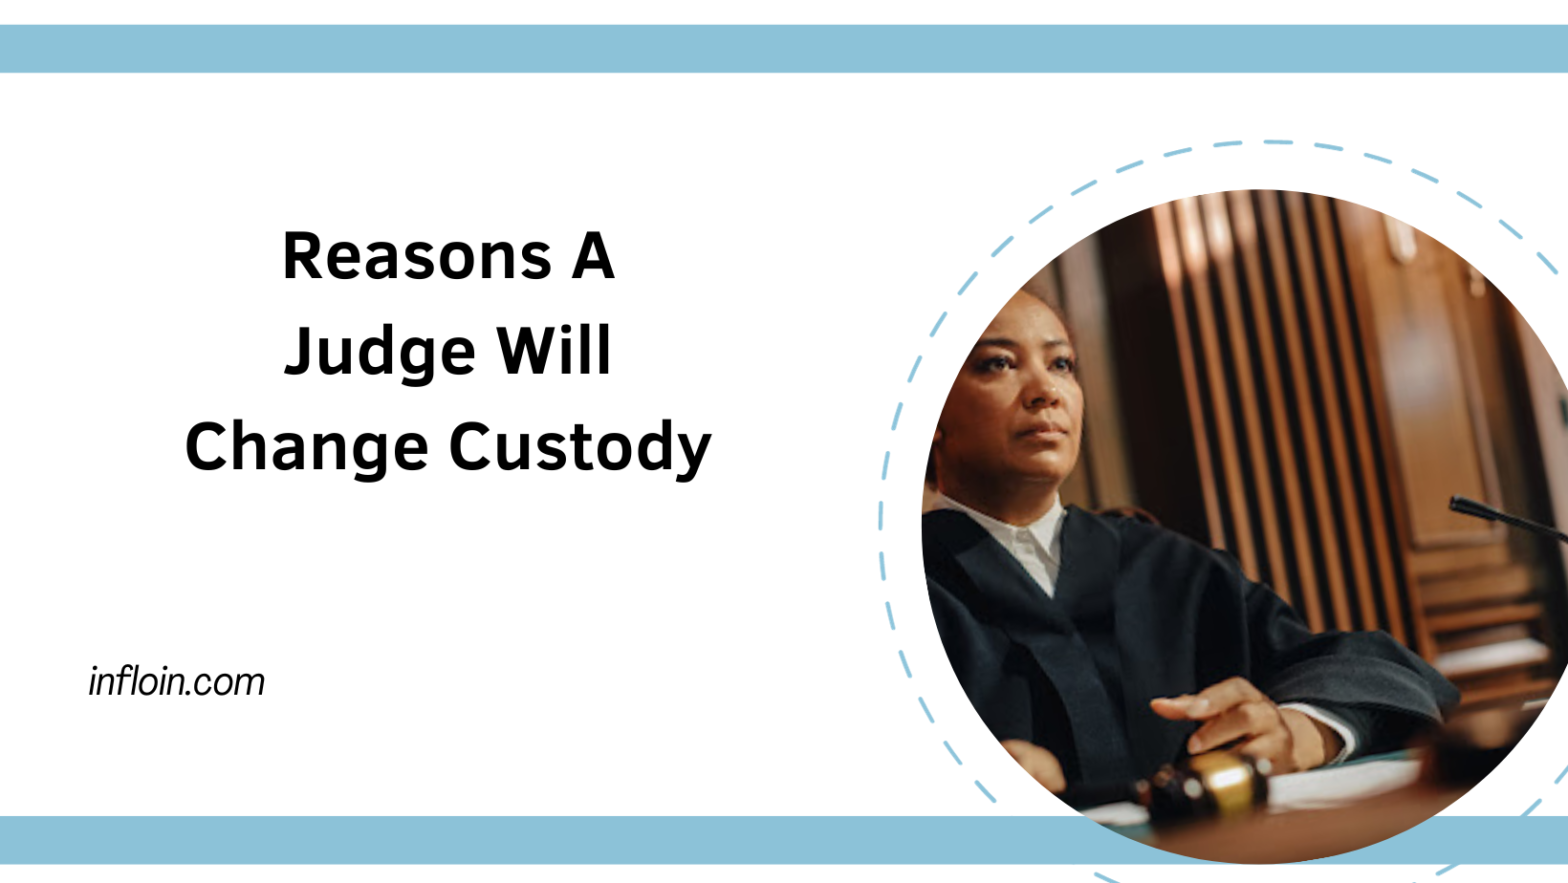 Reasons a Judge Will Change Custody